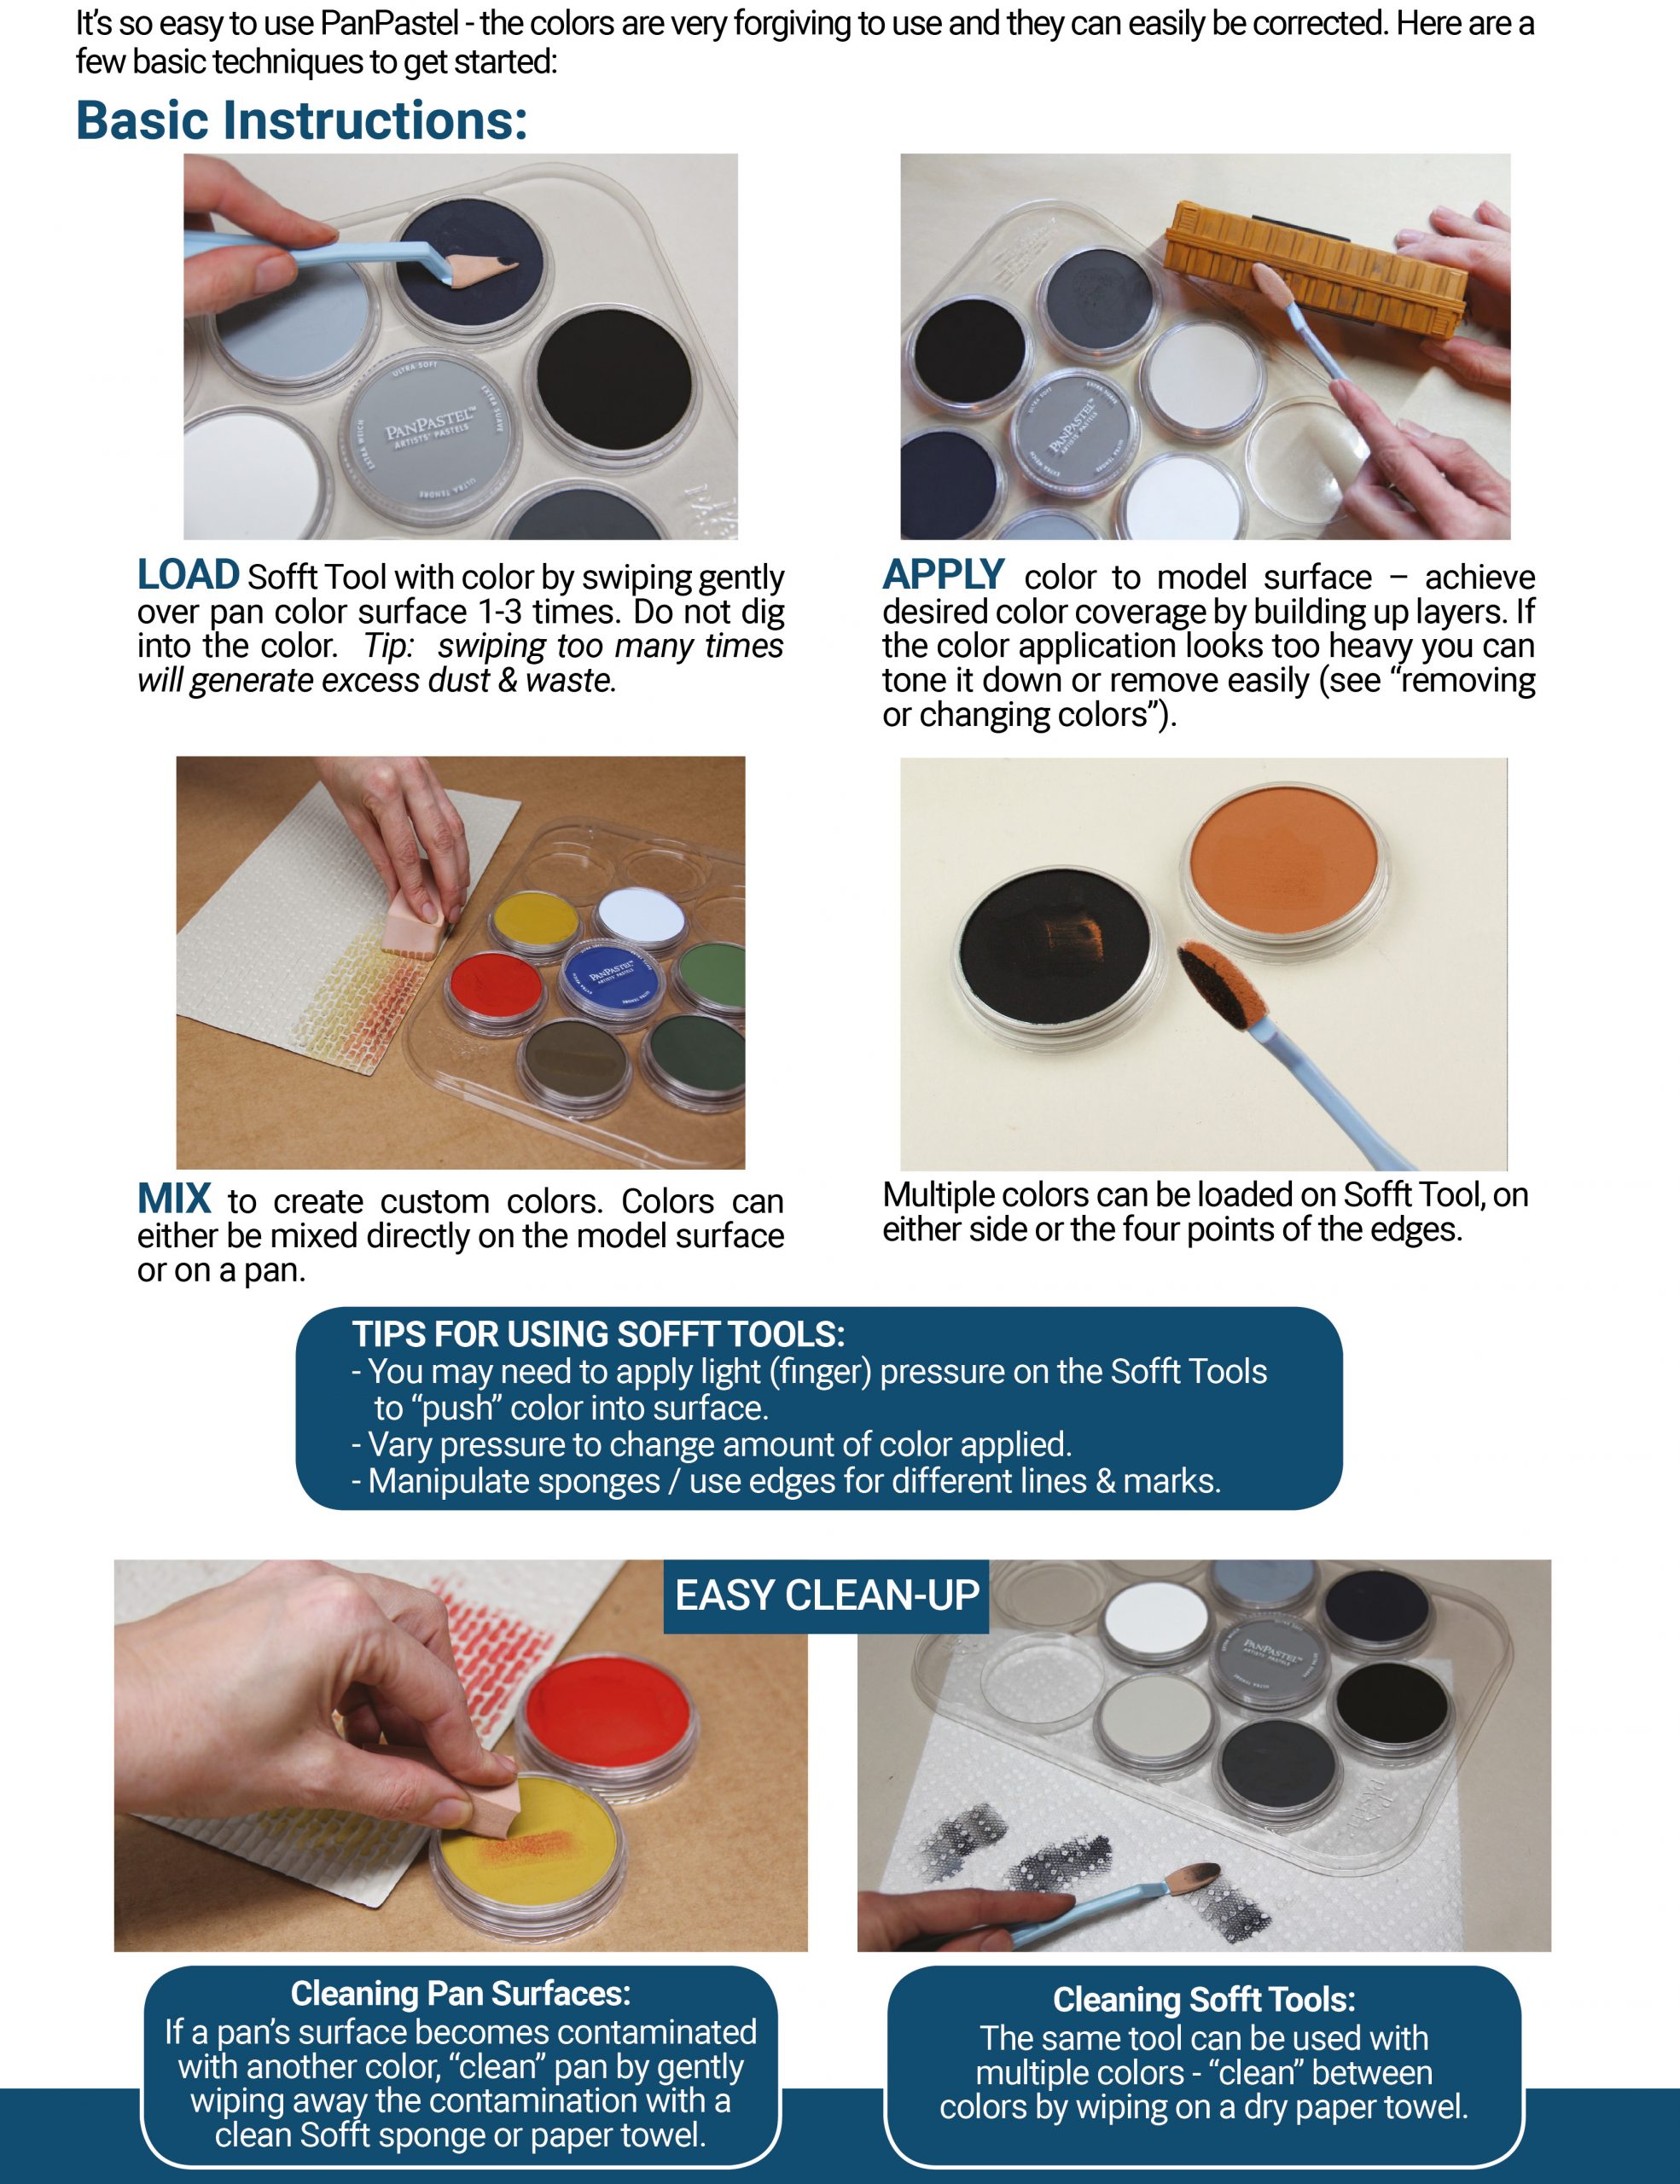 Modeling Colors Basic Instructions